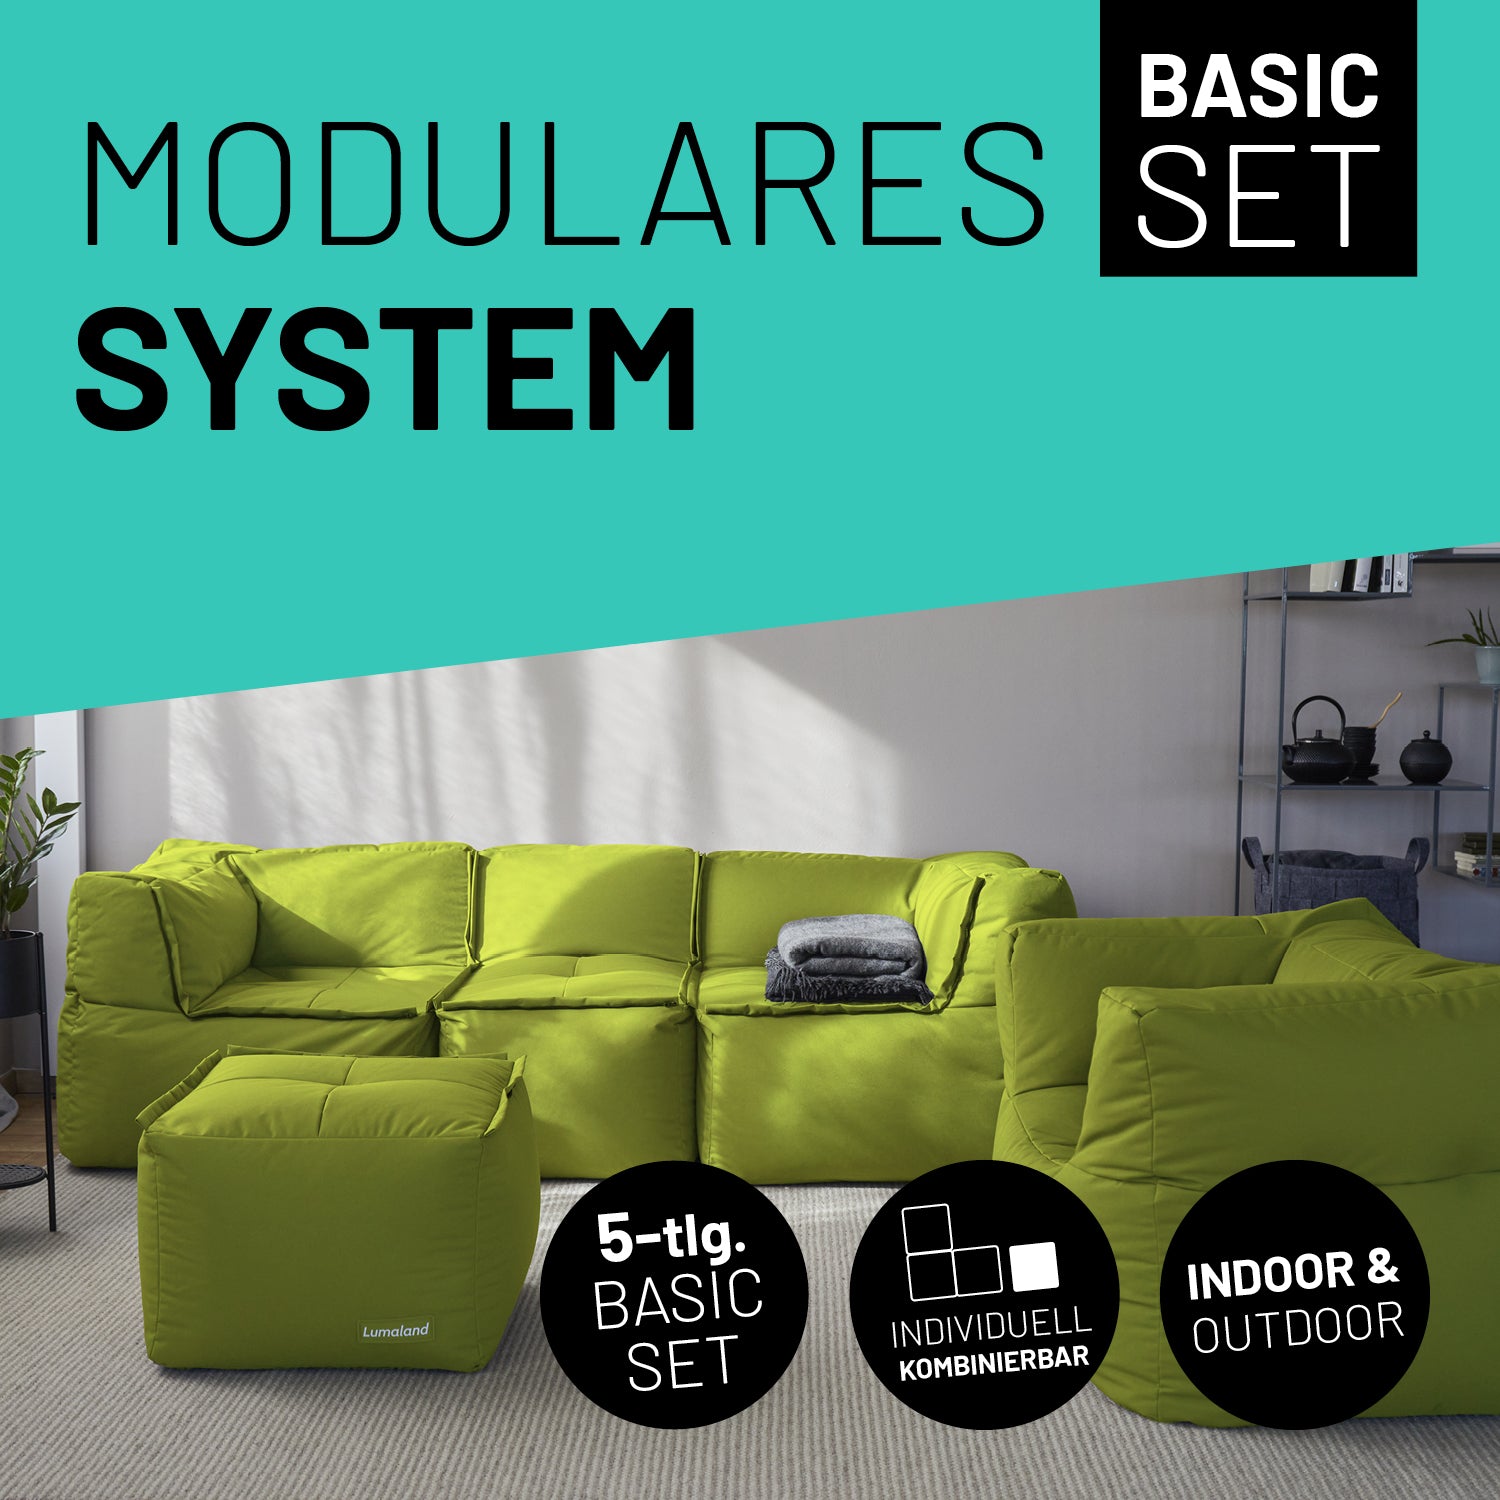 Basic Set (5-tlg.) - Modulares System - In- & outdoor - Apfelgrün